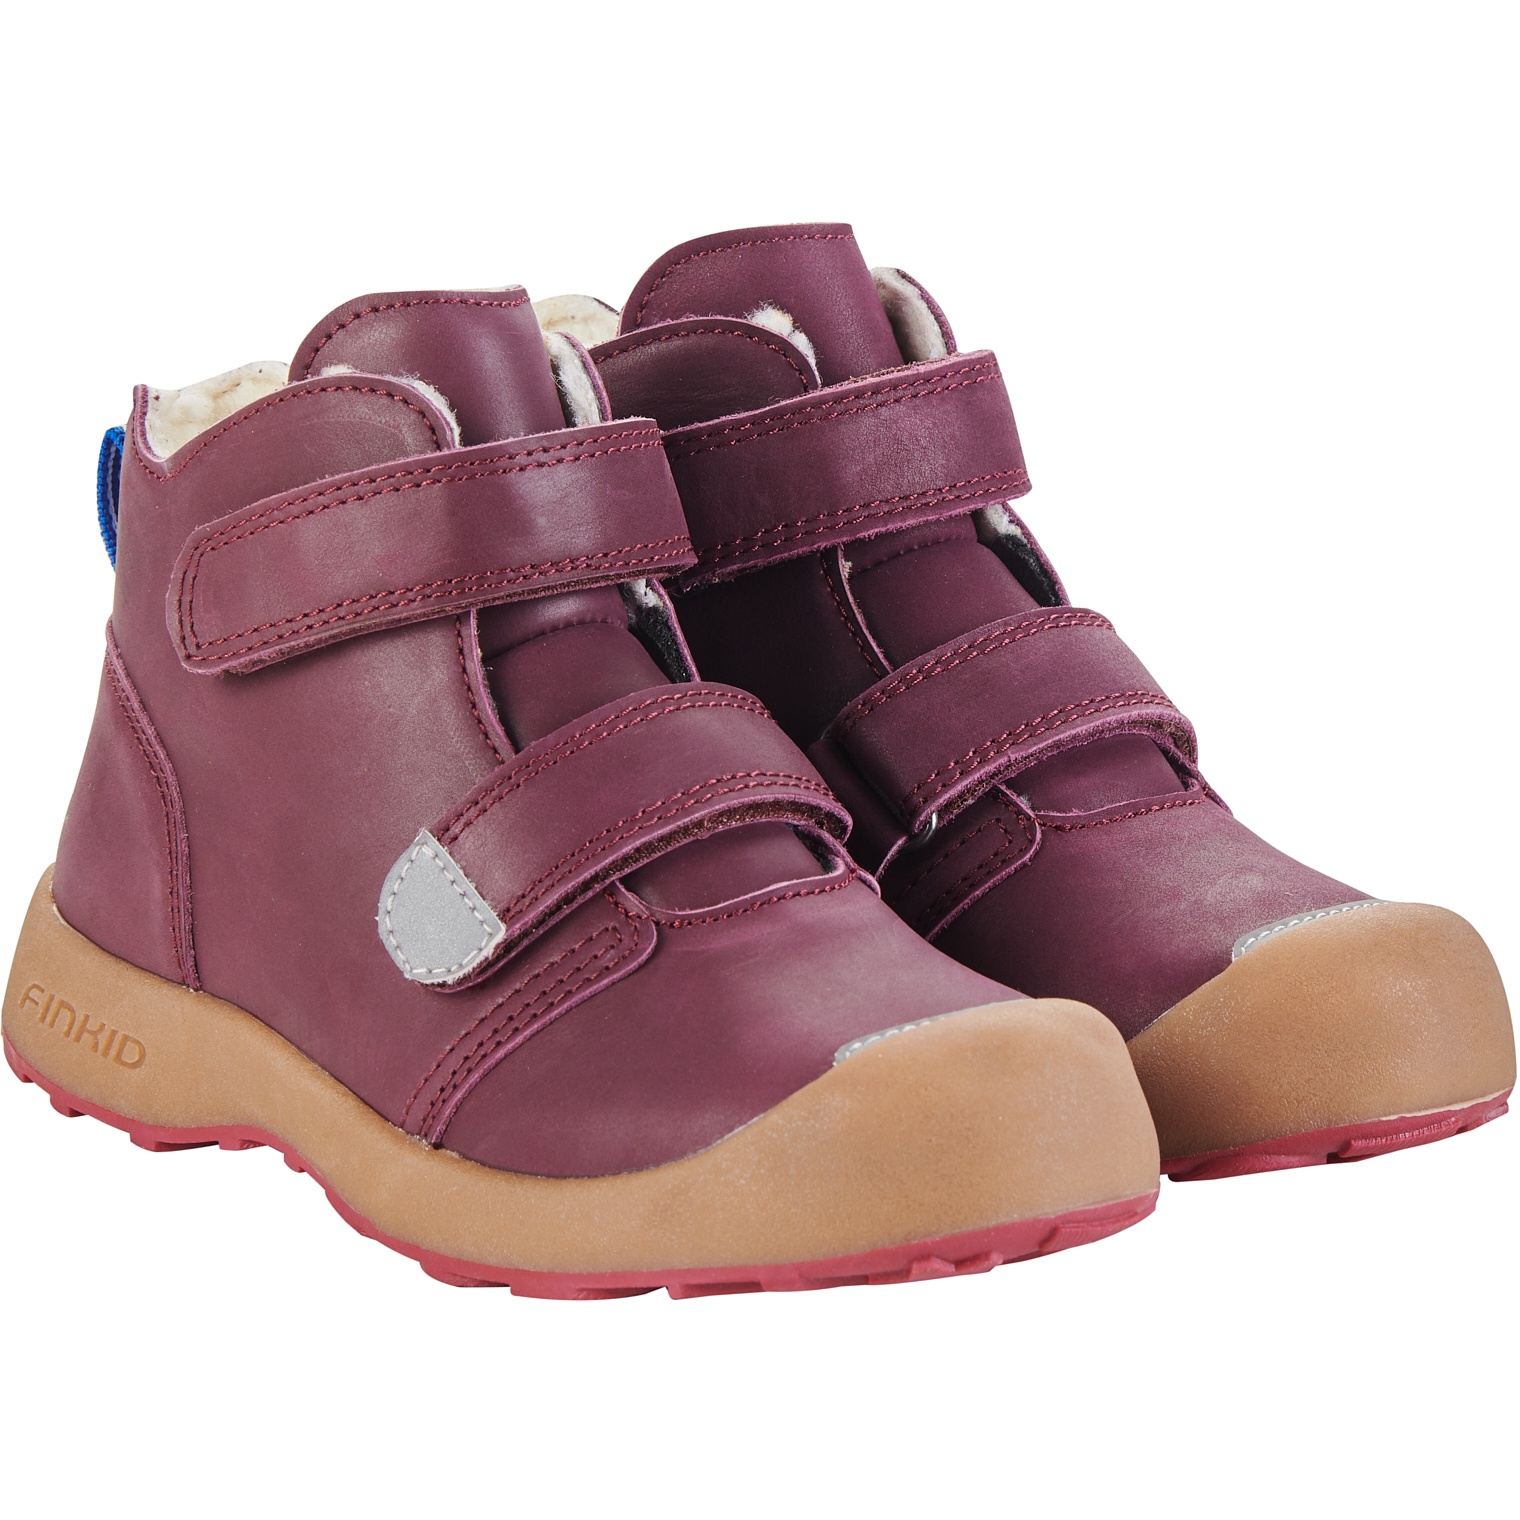 Picture of Finkid TASSU Kids Shoes - eggplant/beet red